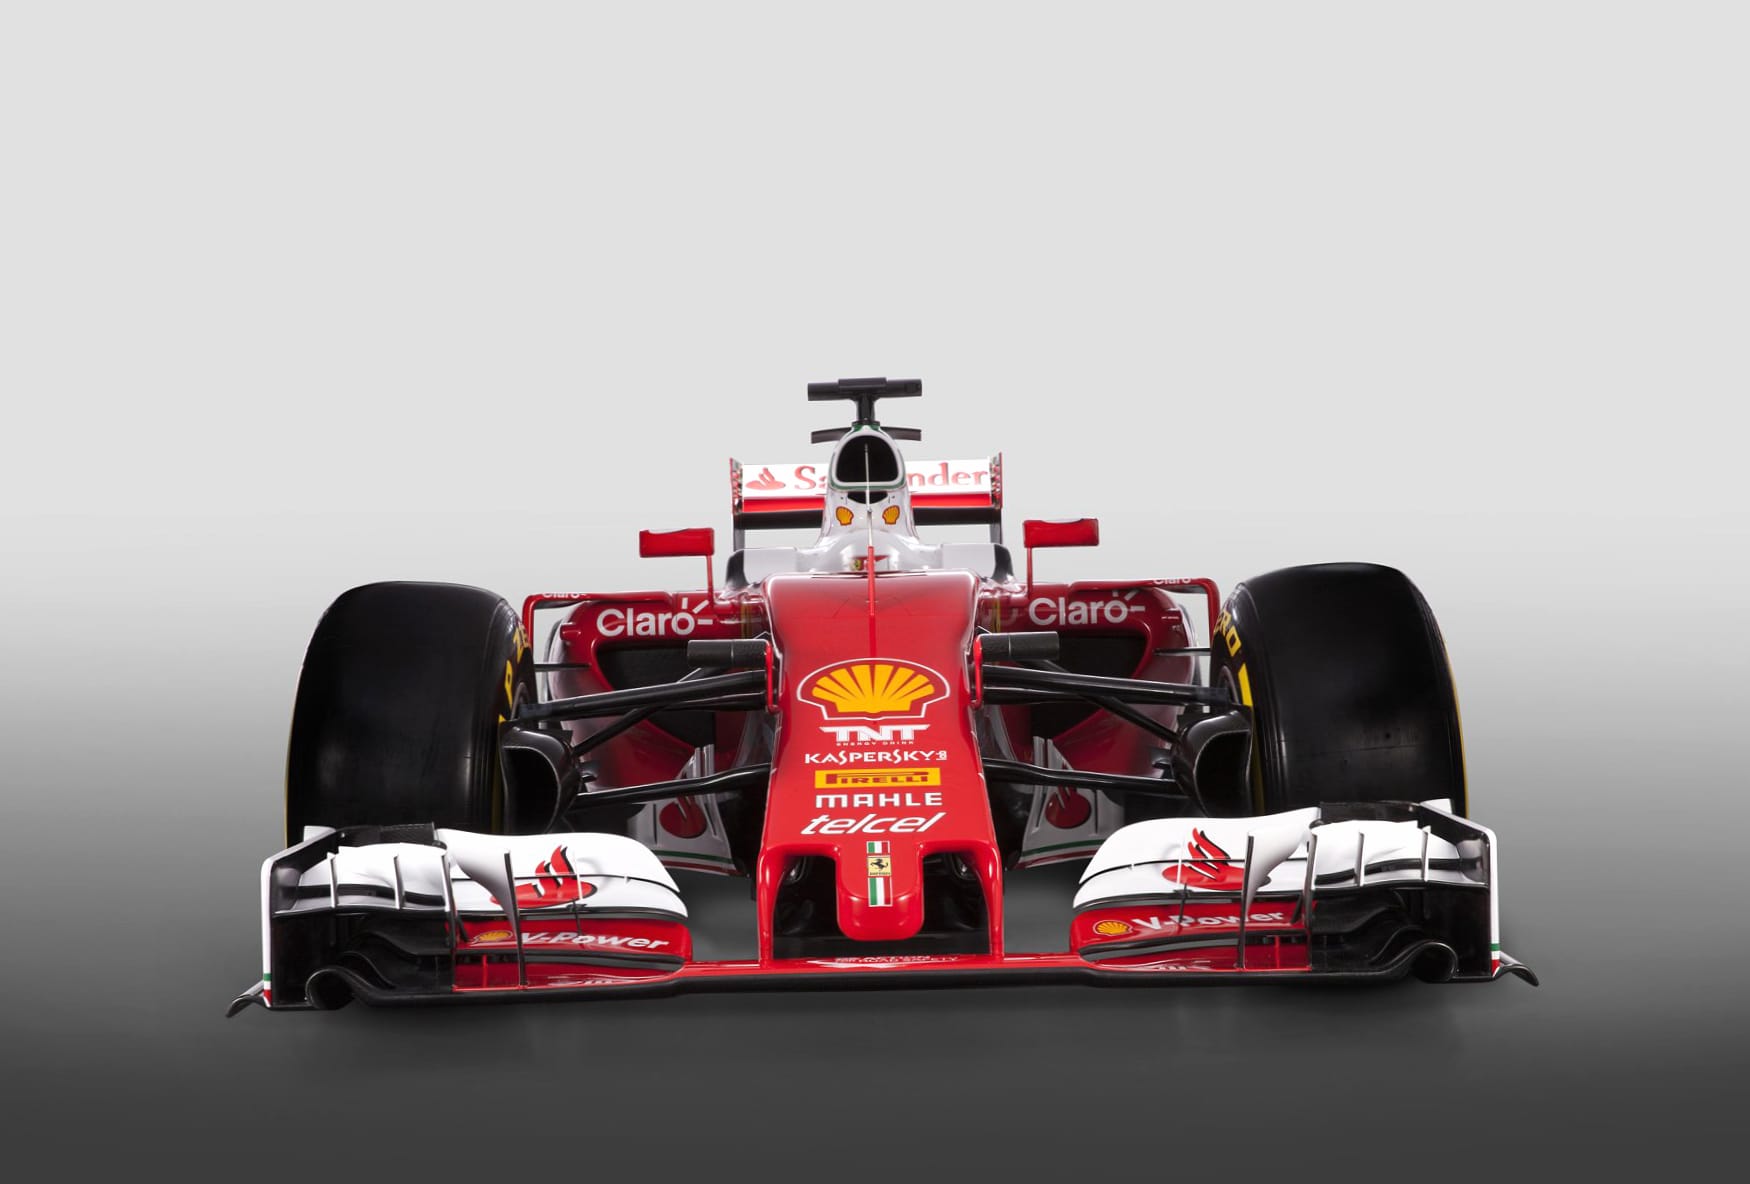 Ferrari SF16-H at 1024 x 1024 iPad size wallpapers HD quality